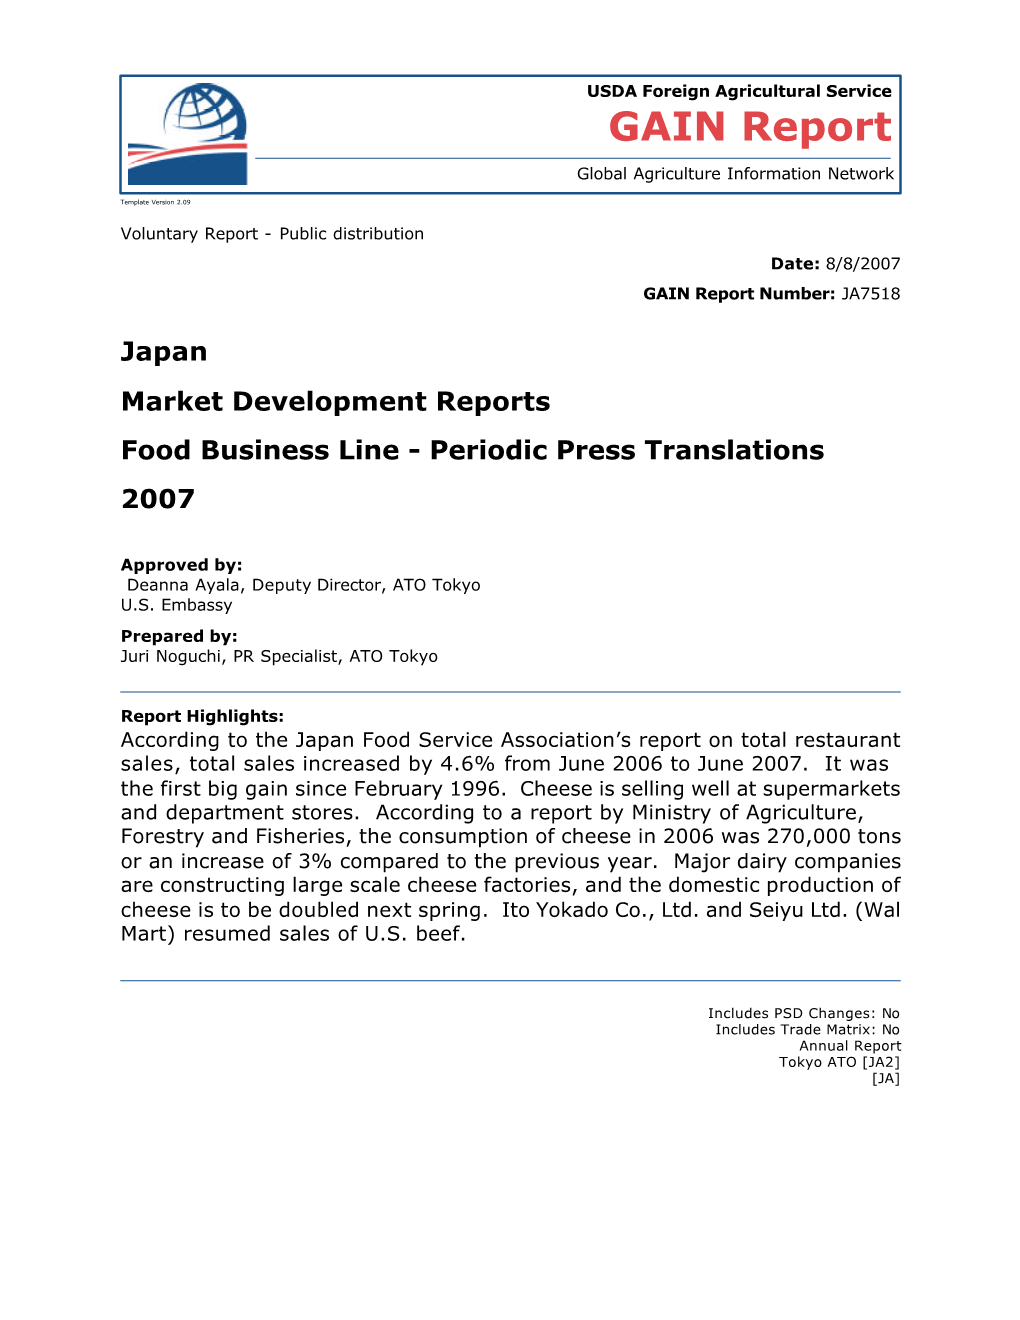 Japan Market Development Reports Food Business Line - Periodic Press Translations 2007